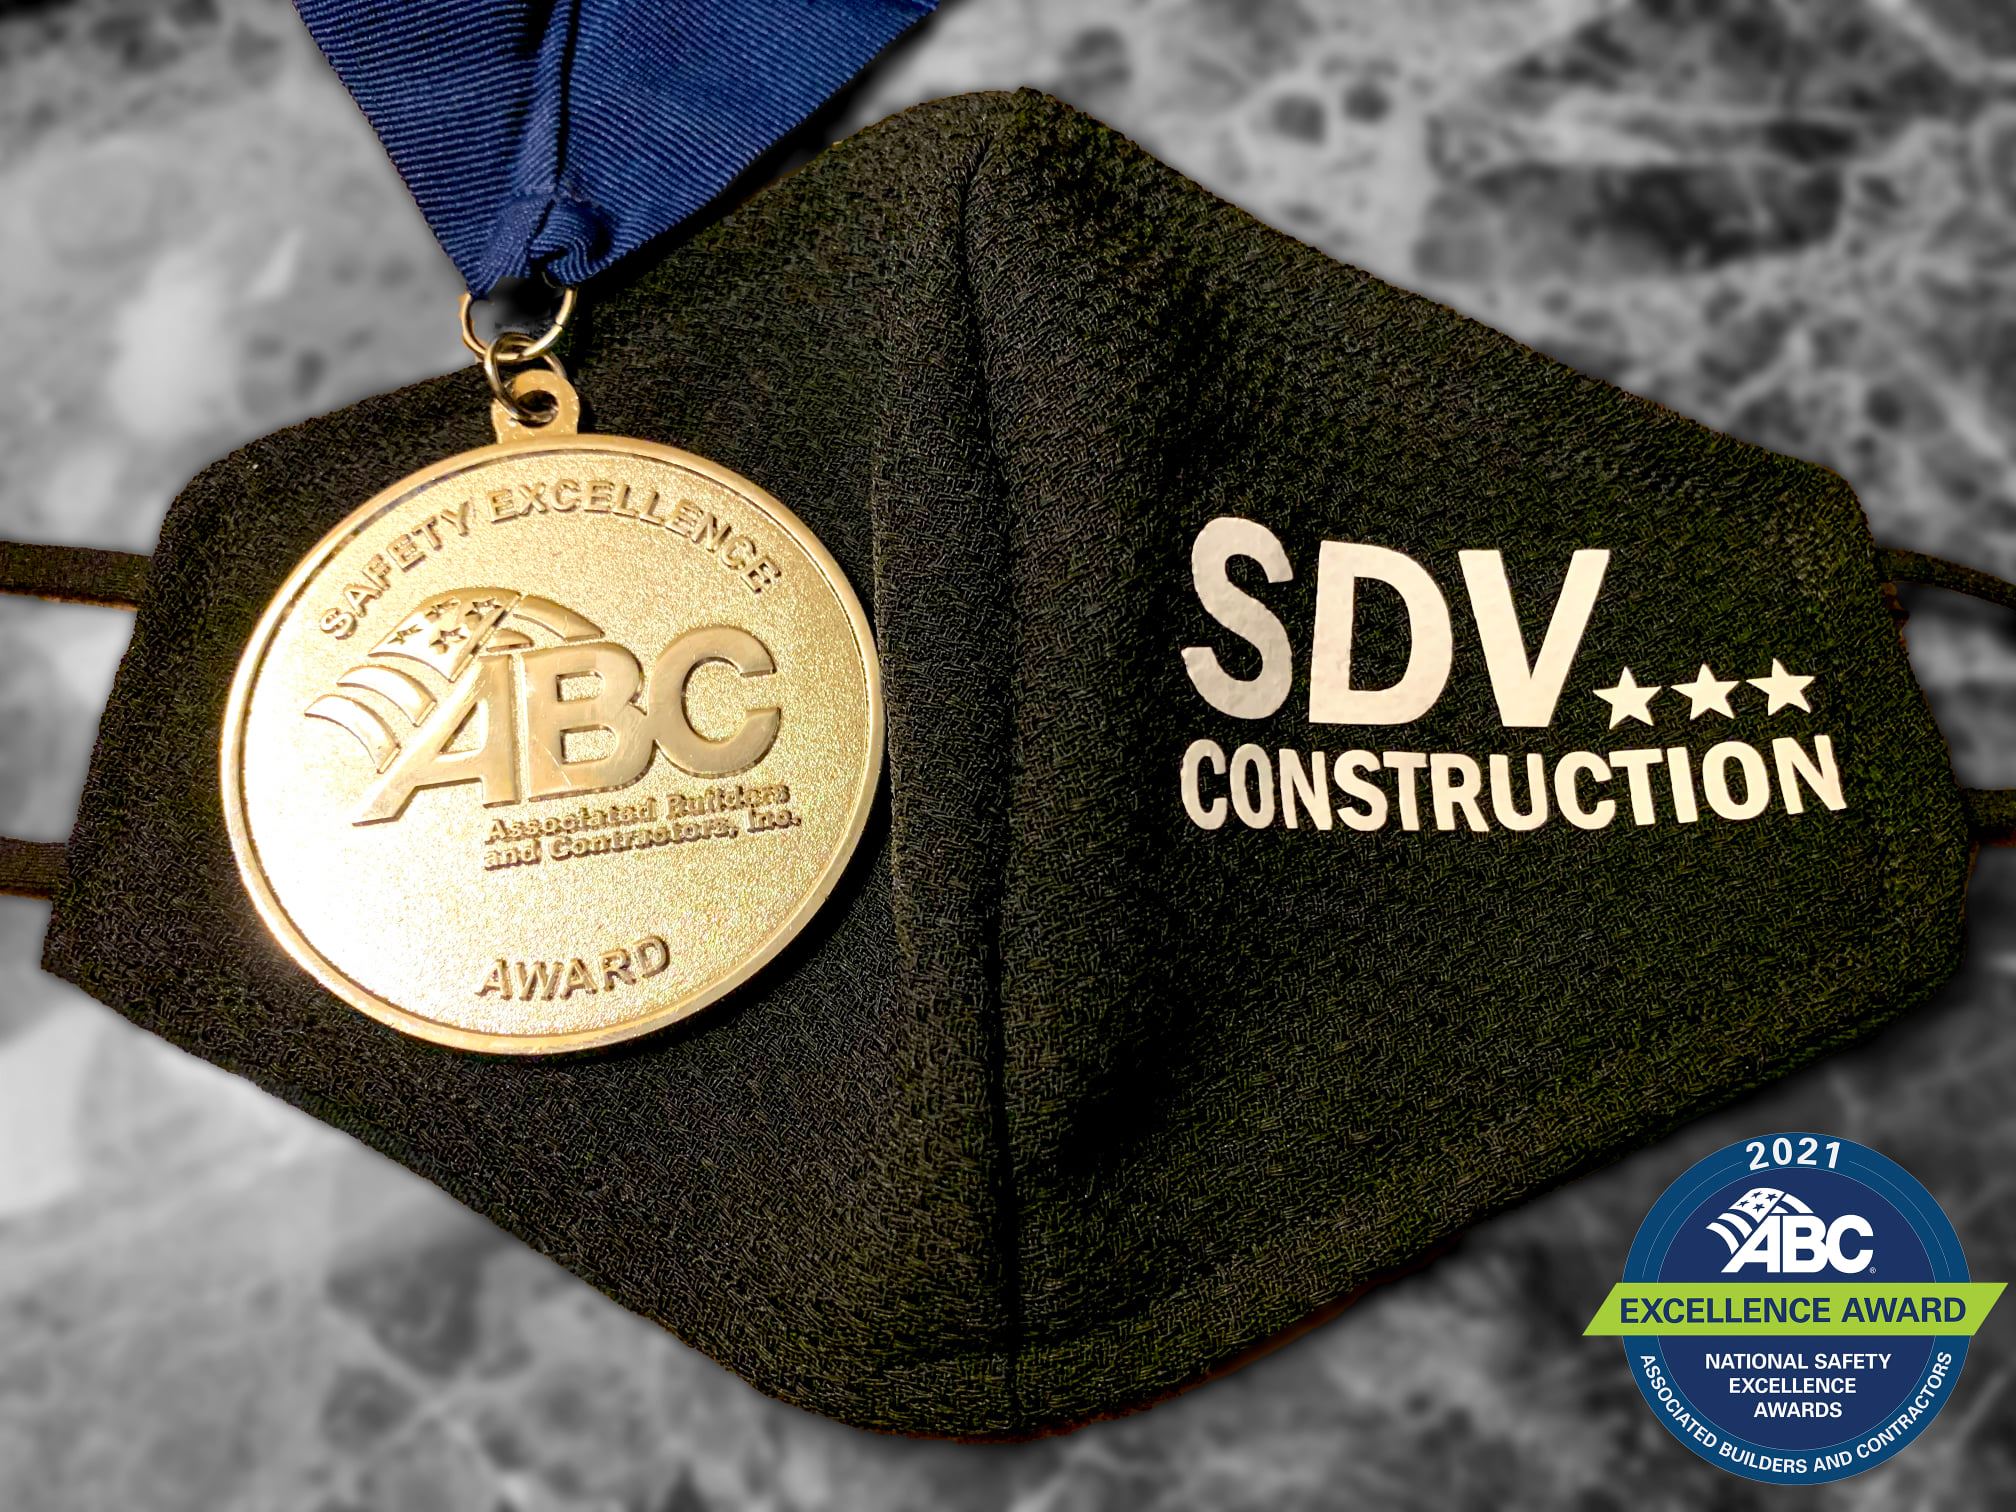 SDV Construction